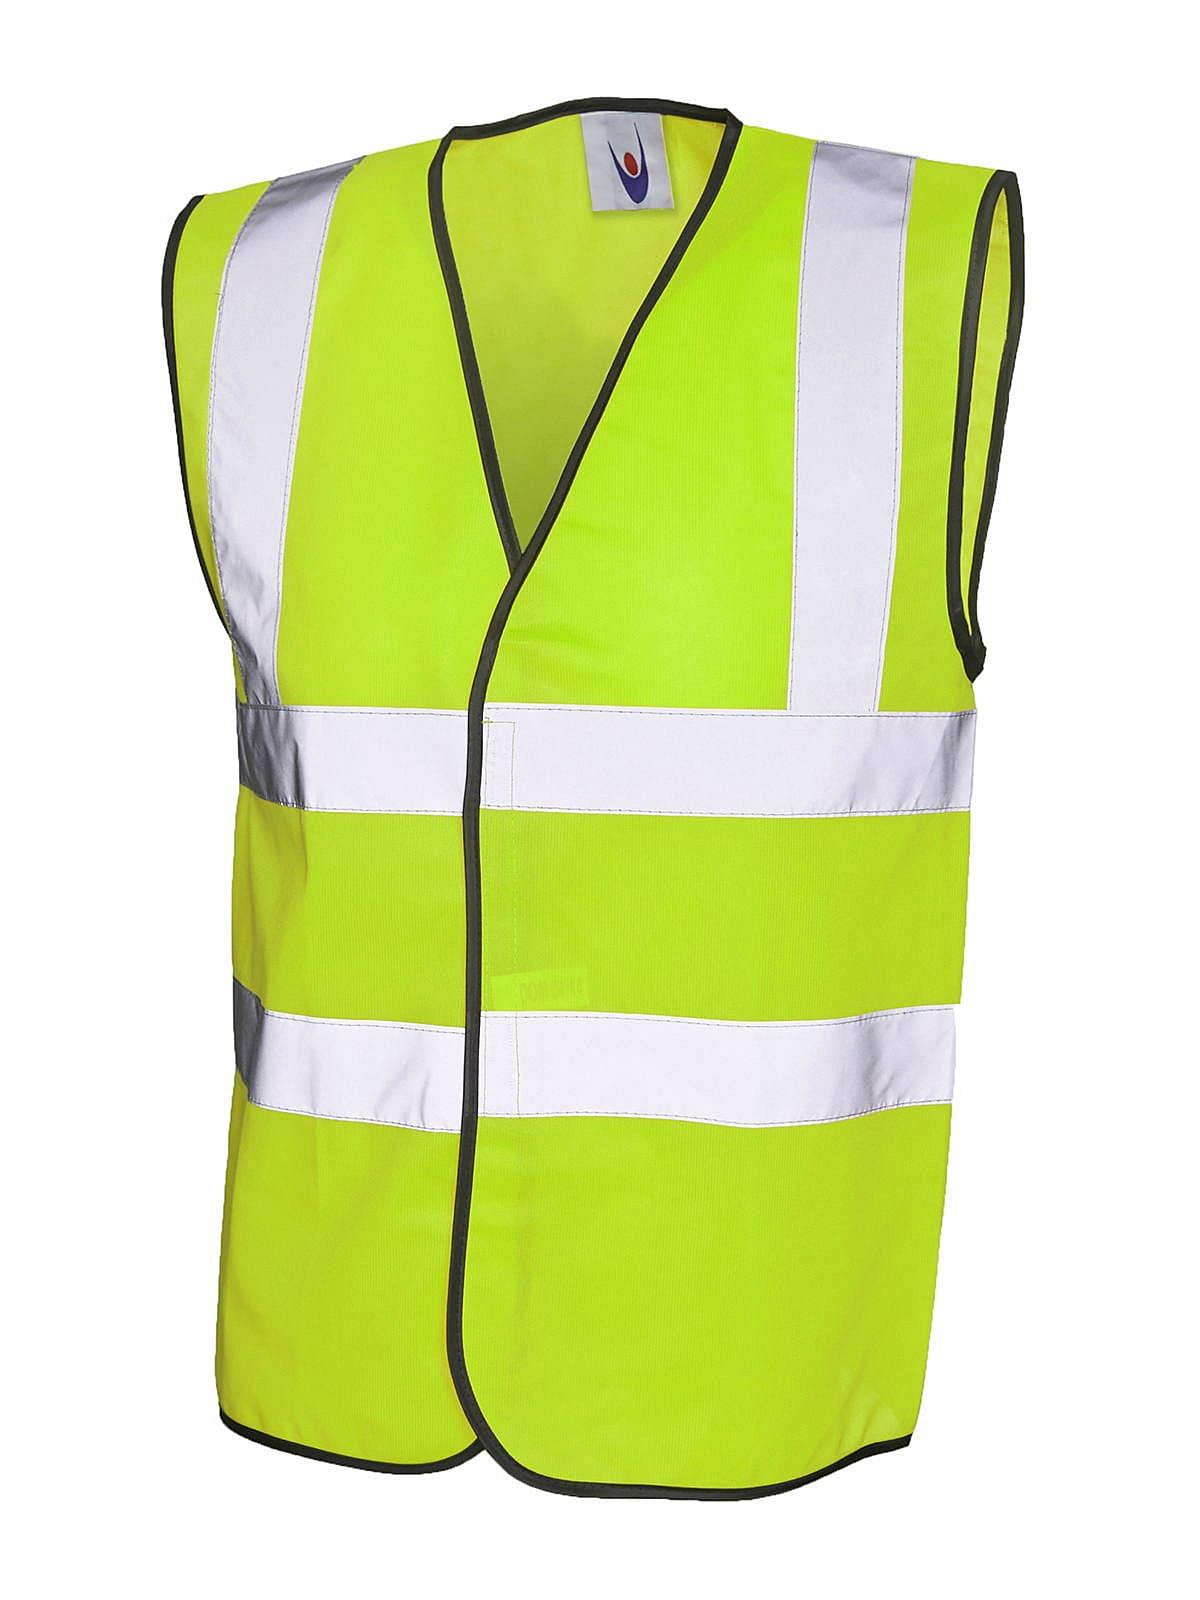 Uneek Sleeveless Safety Waist Coat in Yellow (Product Code: UC801)